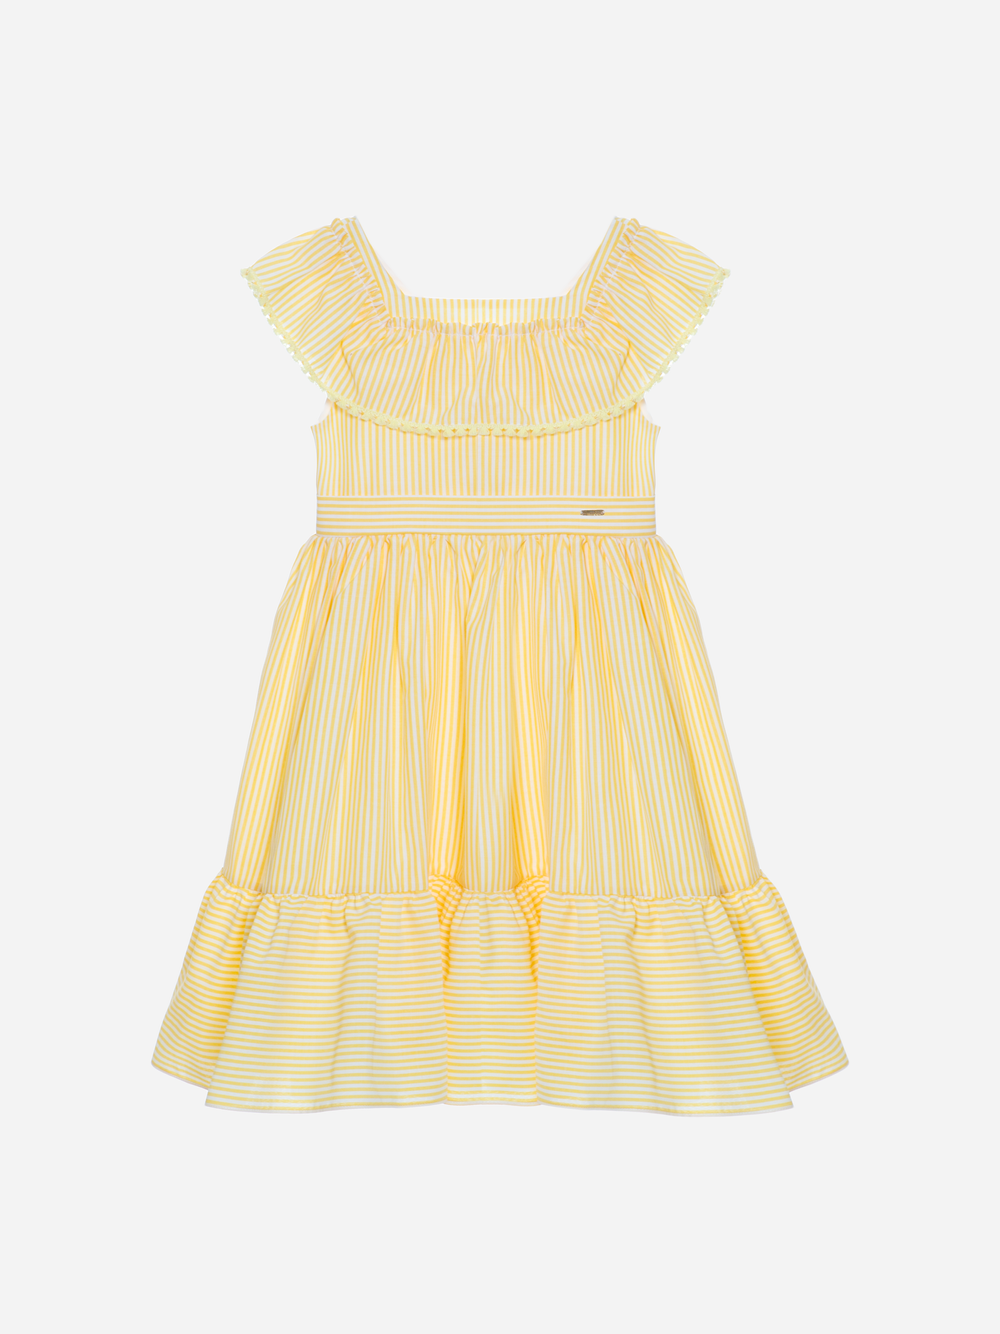 Yellow dress with striped pattern